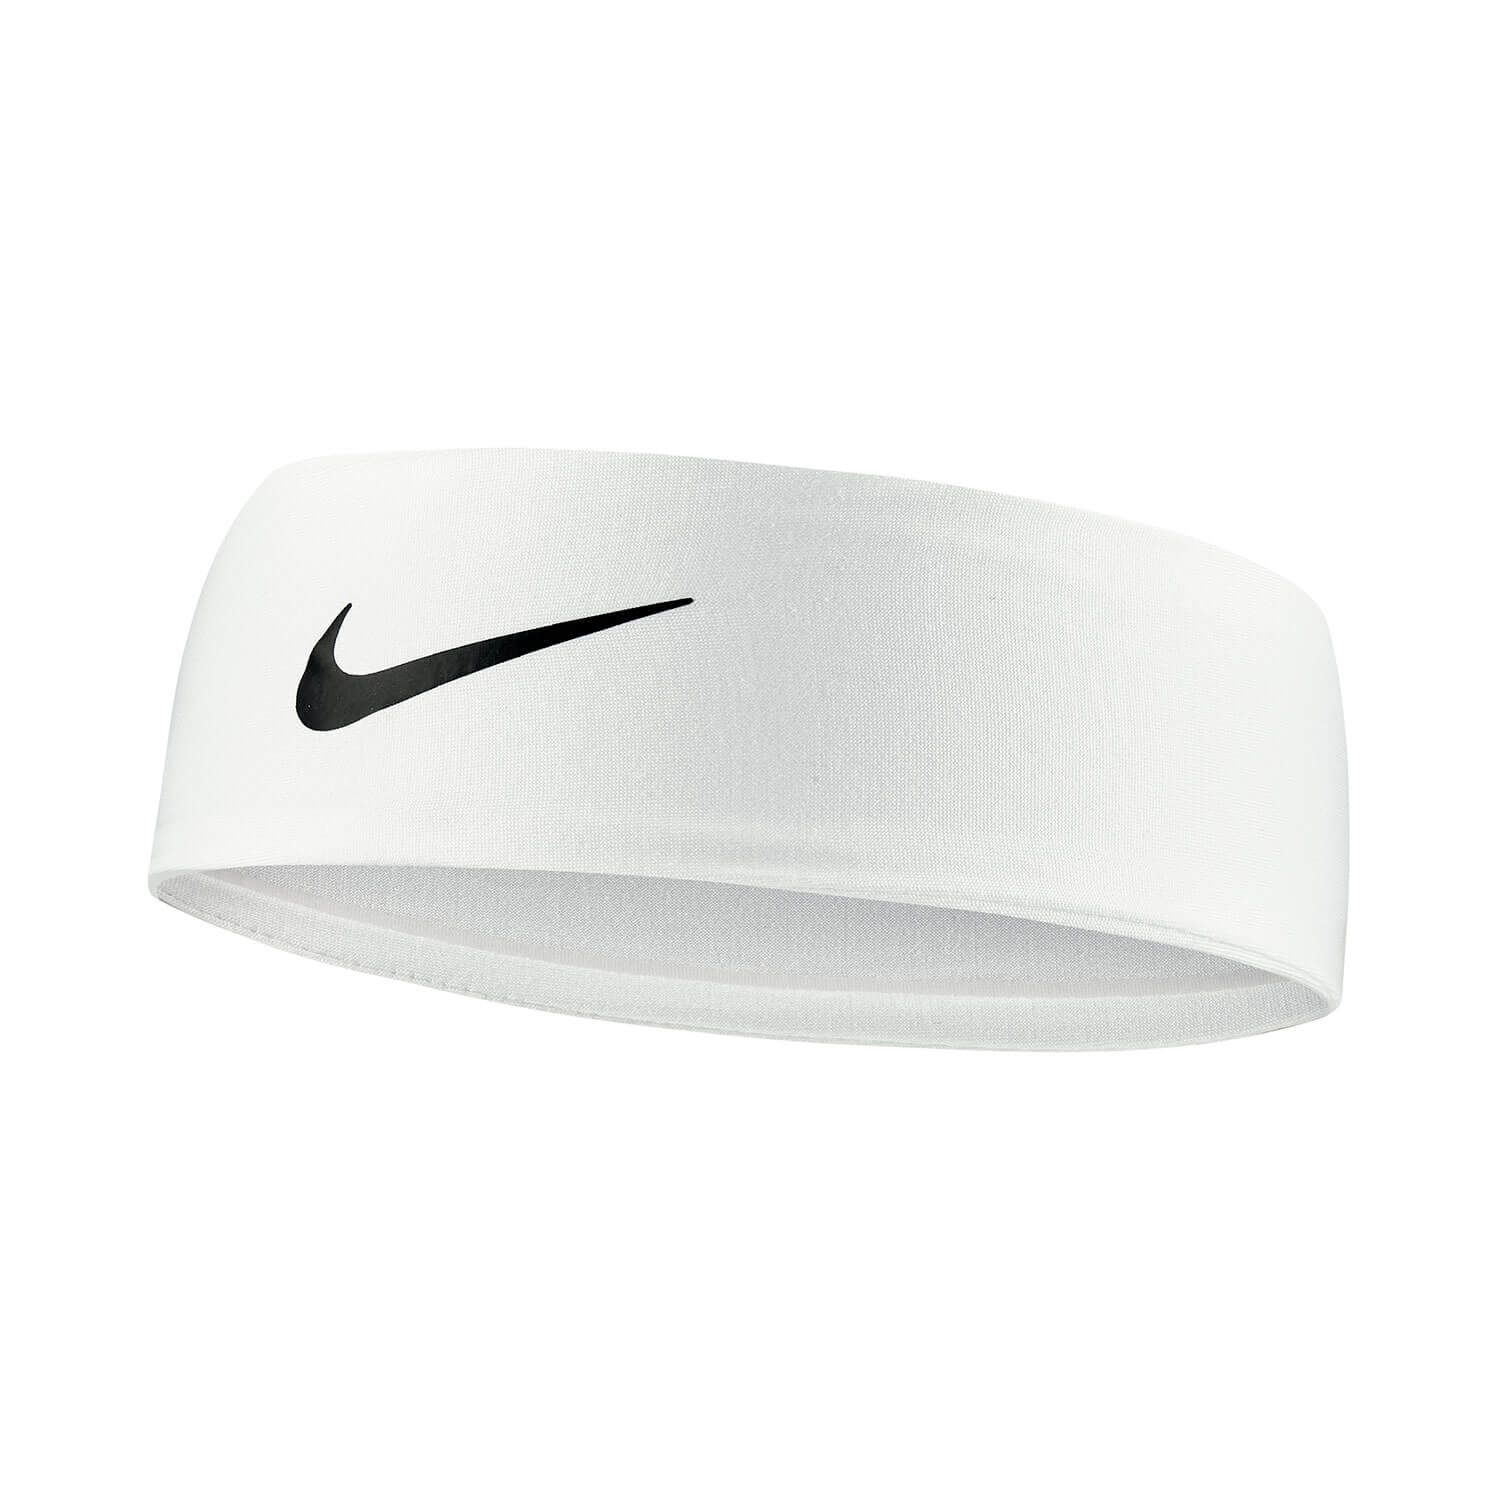 Nike Fury Headband 3.0 White-Black (Lateral - Front)